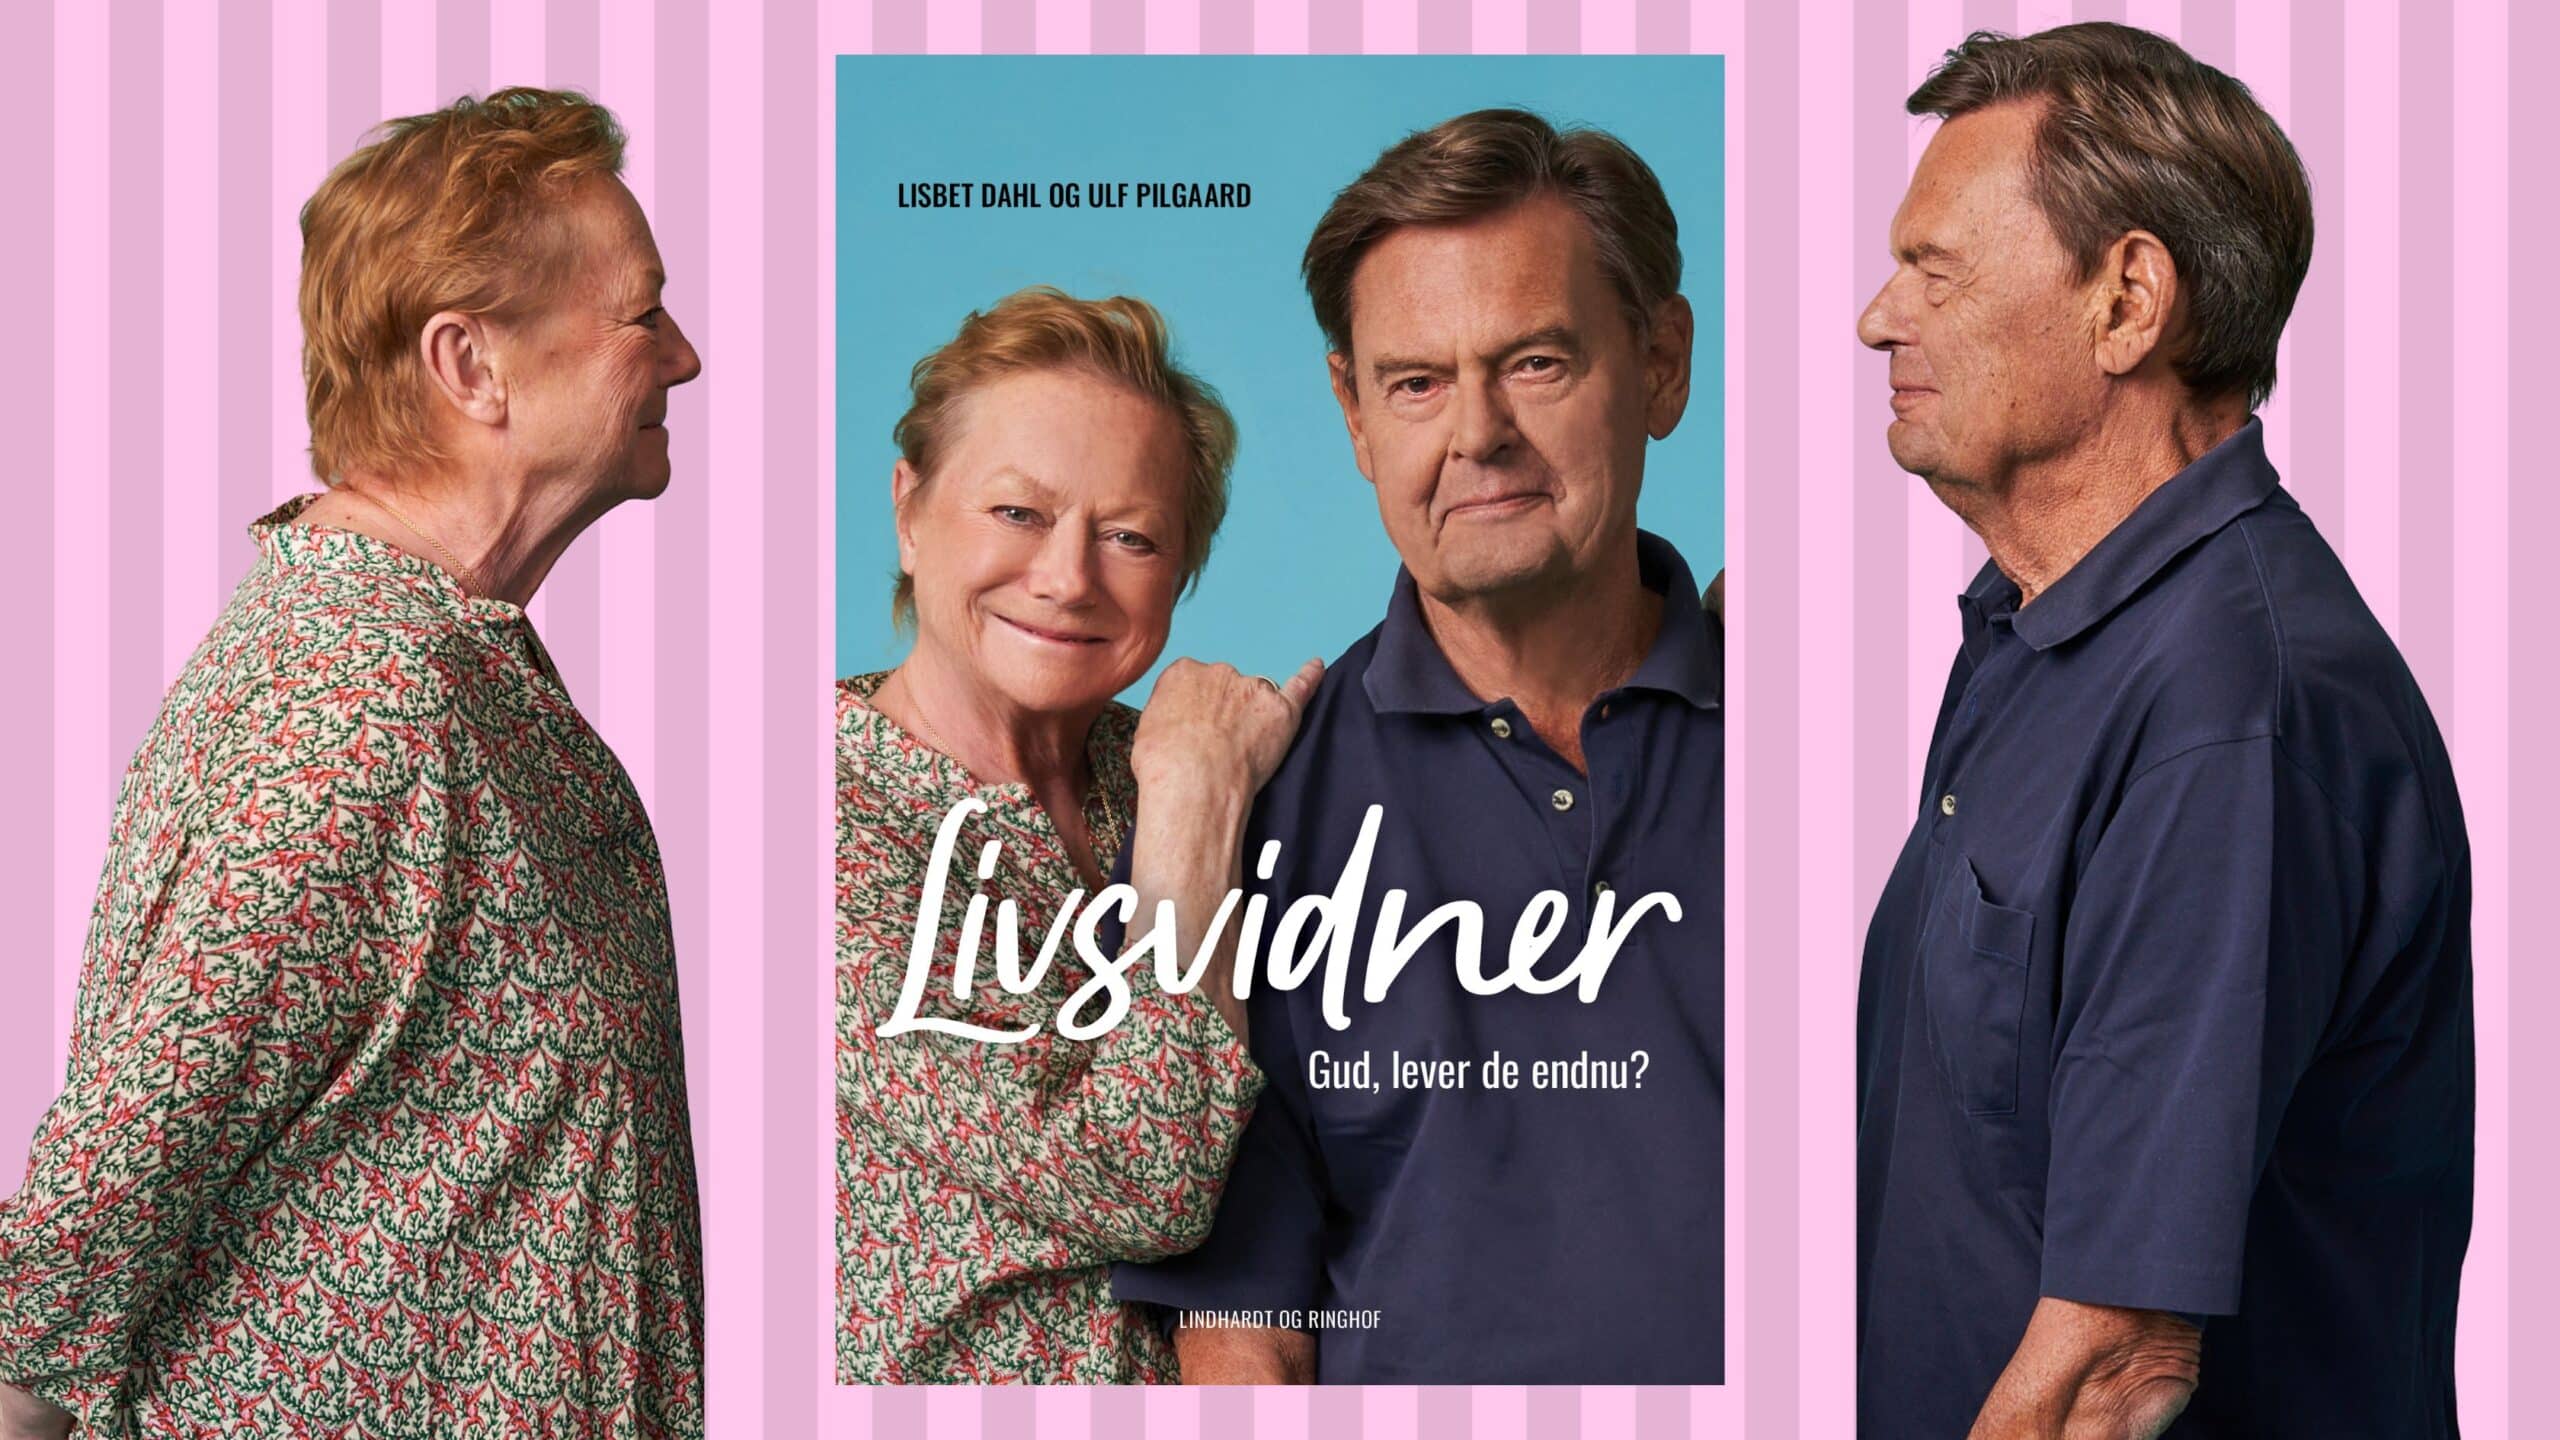 Lisbet Dahl og Ulf Pilgaard: Livsvidner